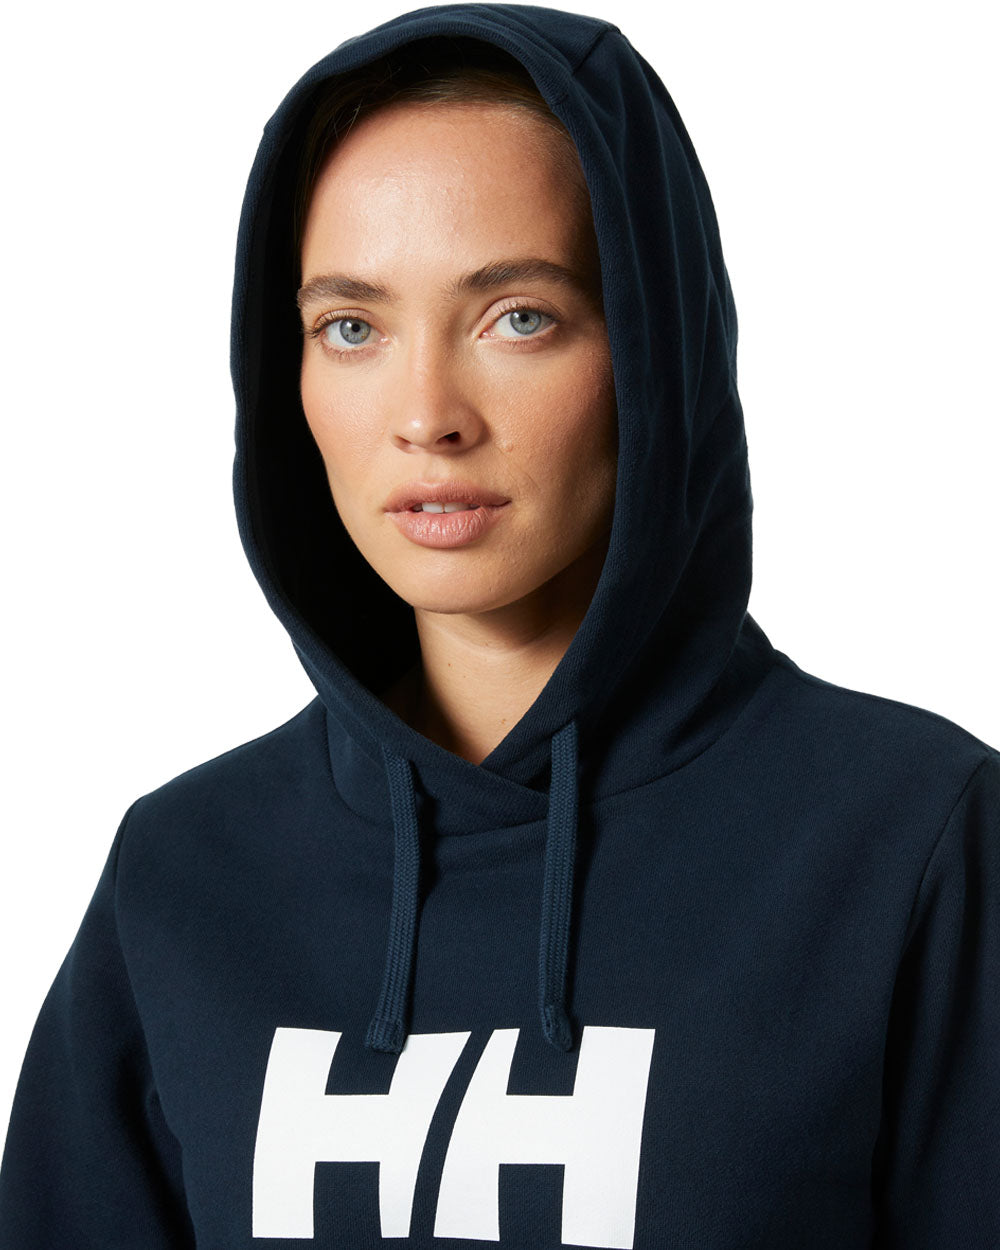 Navy coloured Helly Hansen Womens Logo Hoodie 2.0 on White background 